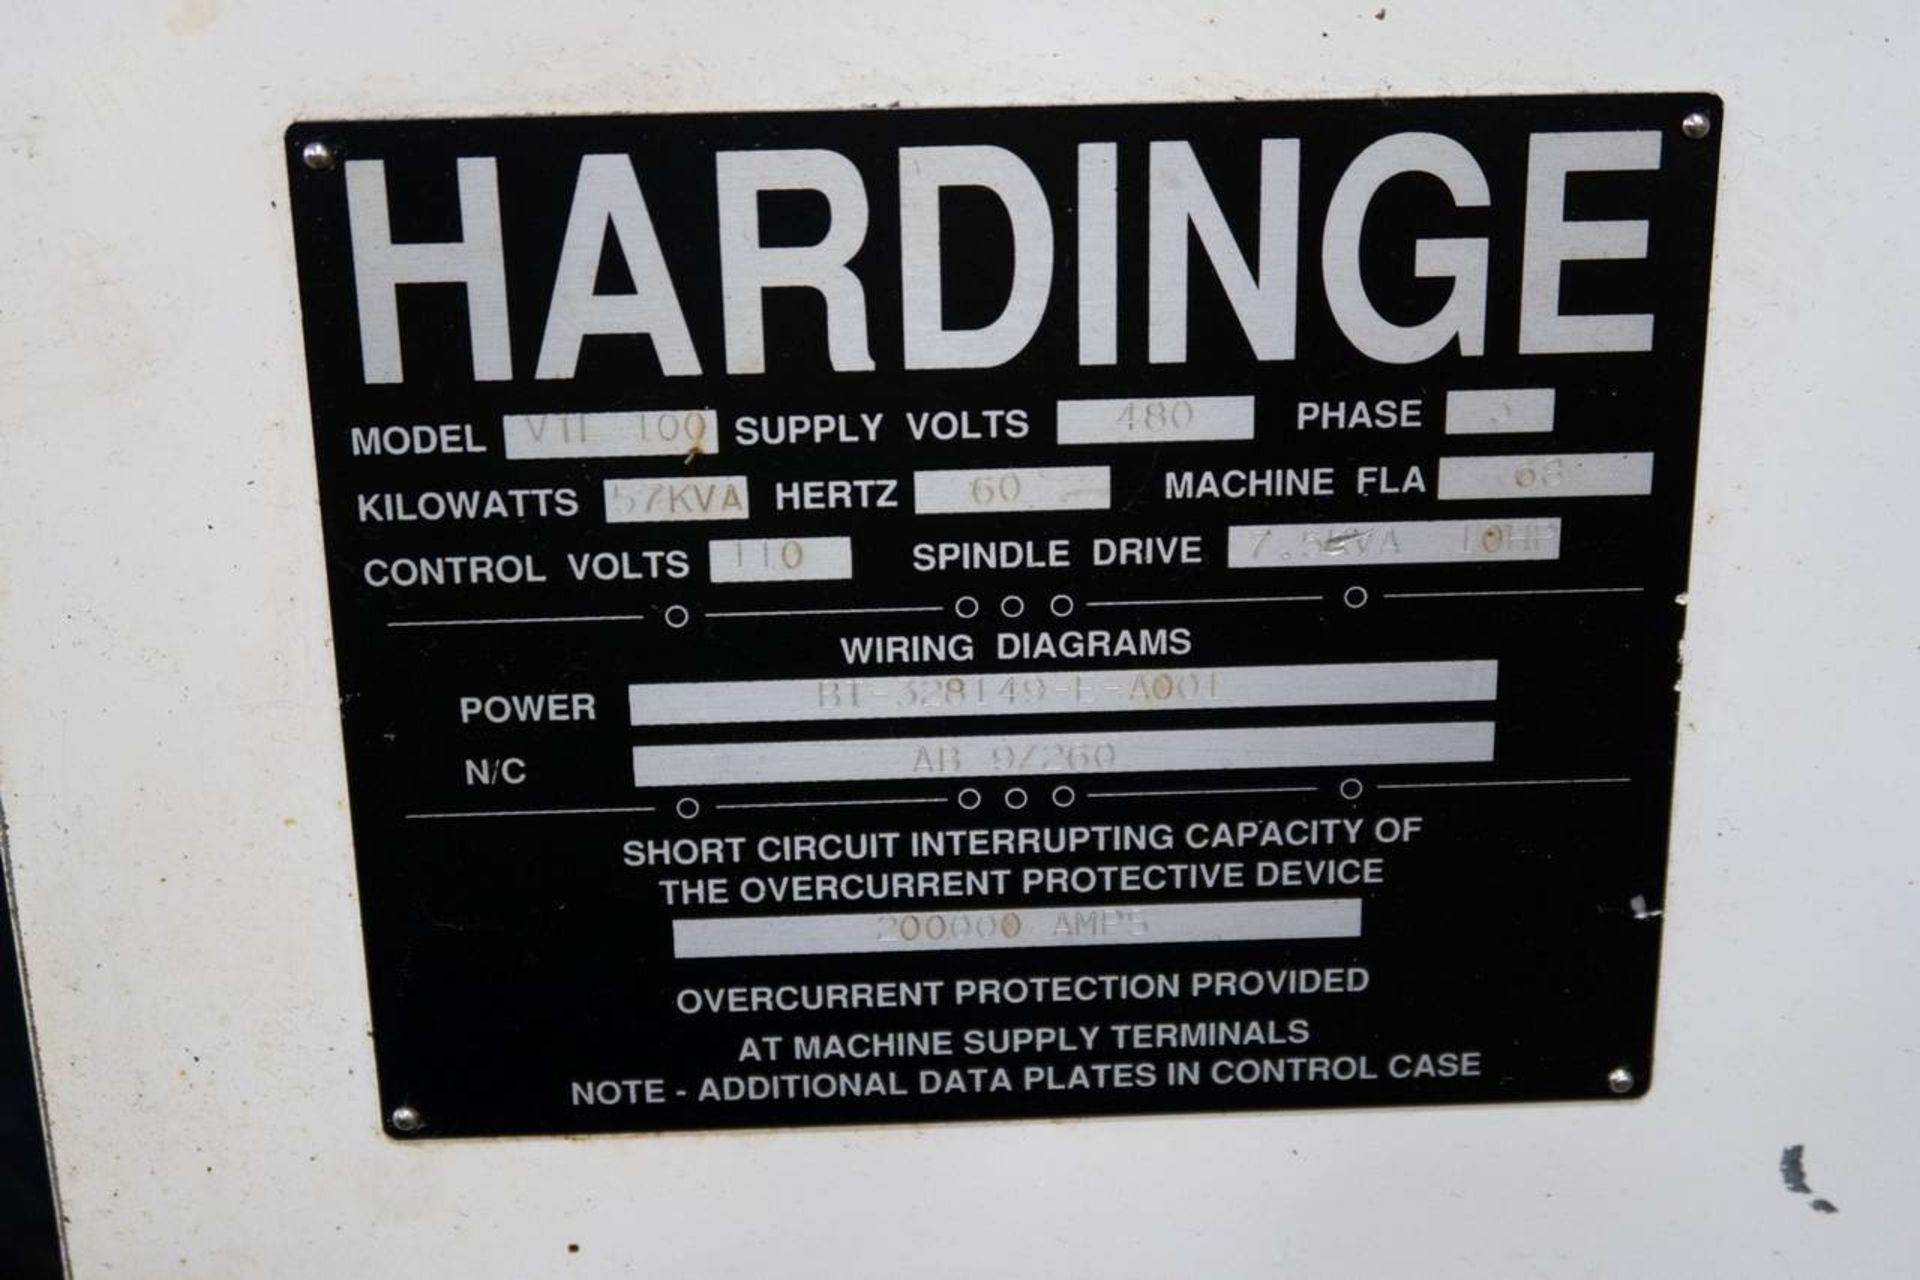 Hardinge Conquest VT-100 CNC Vertical Turning Center - Image 9 of 11